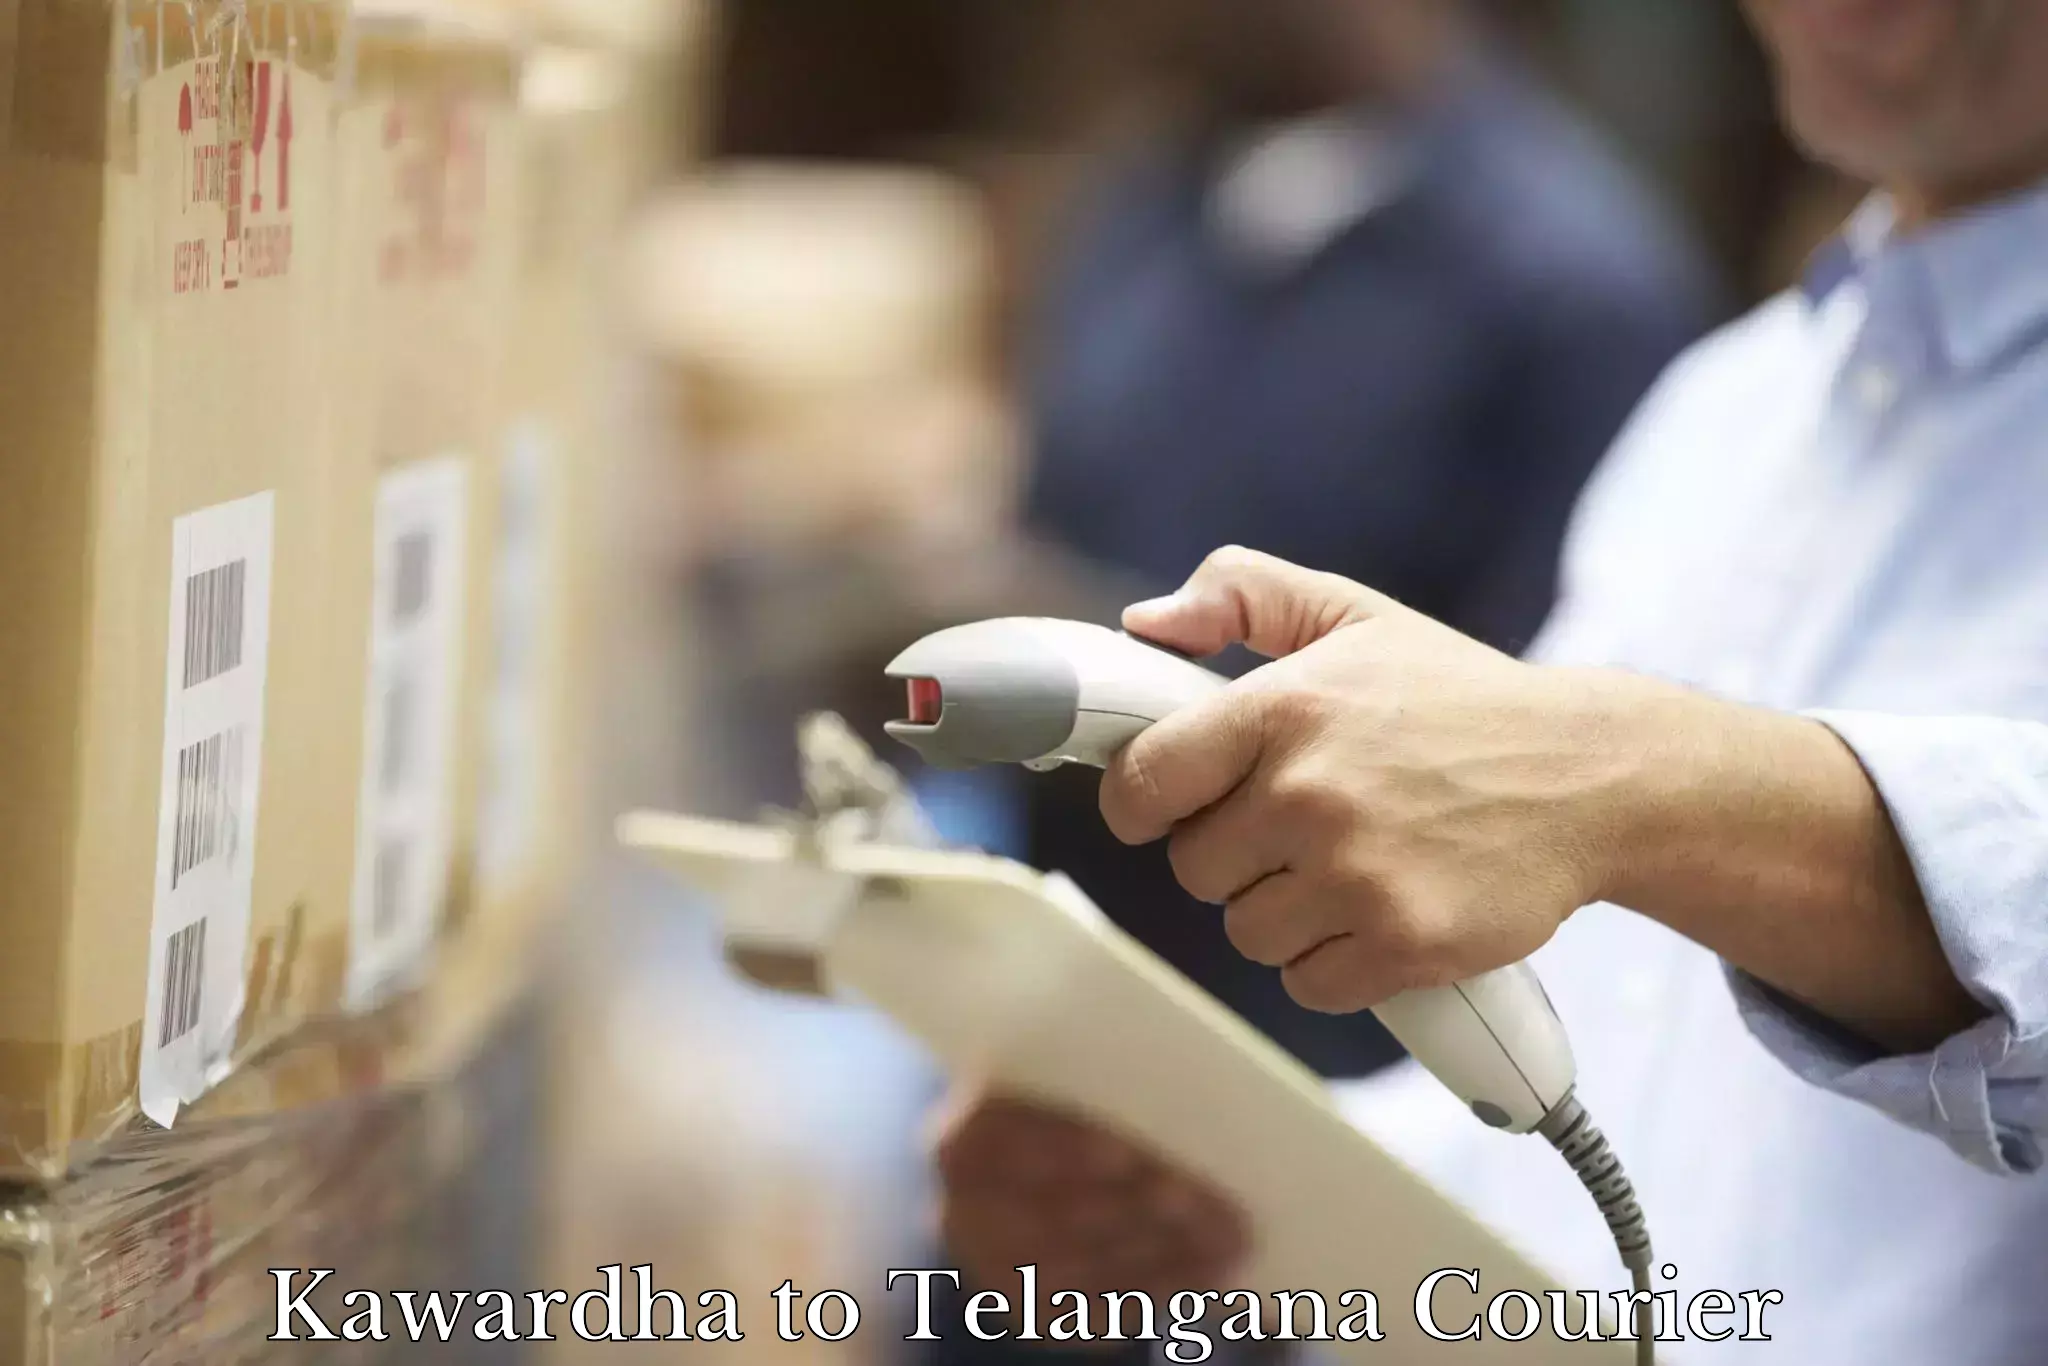 Quick dispatch service Kawardha to Telangana